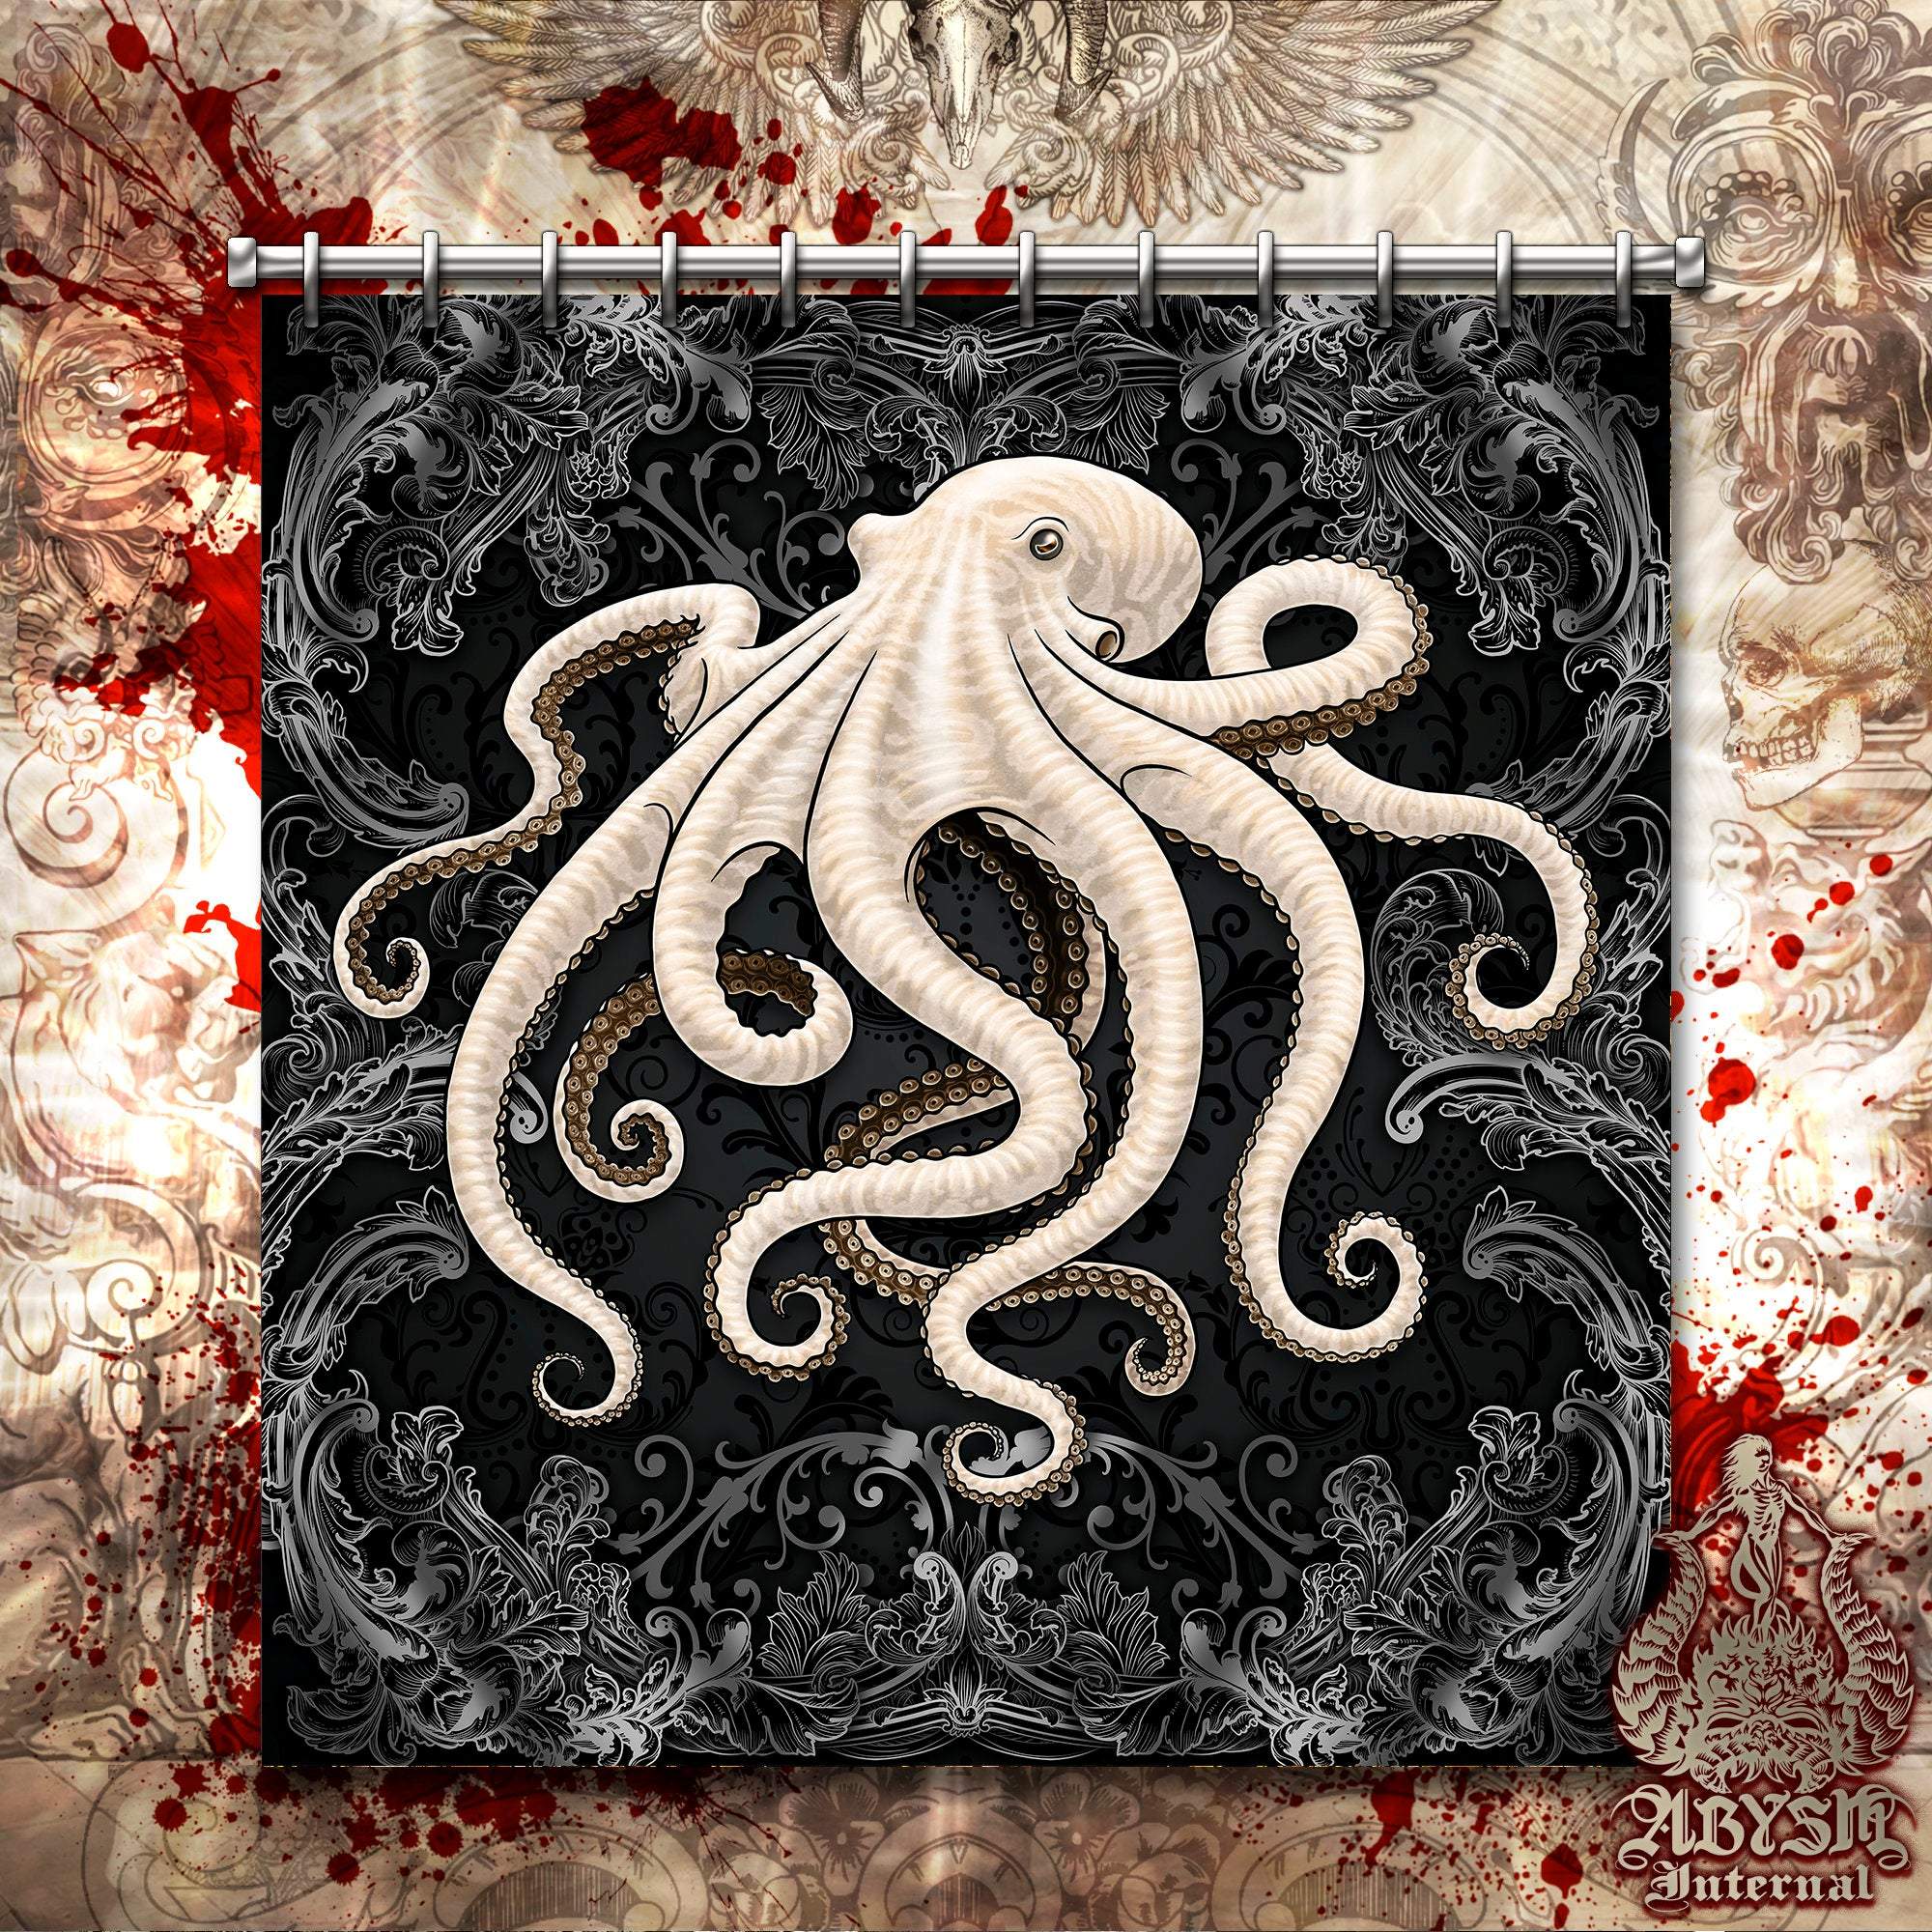 Octopus Shower Curtain, Beach Home and Bathroom Decor - Black & White - Abysm Internal